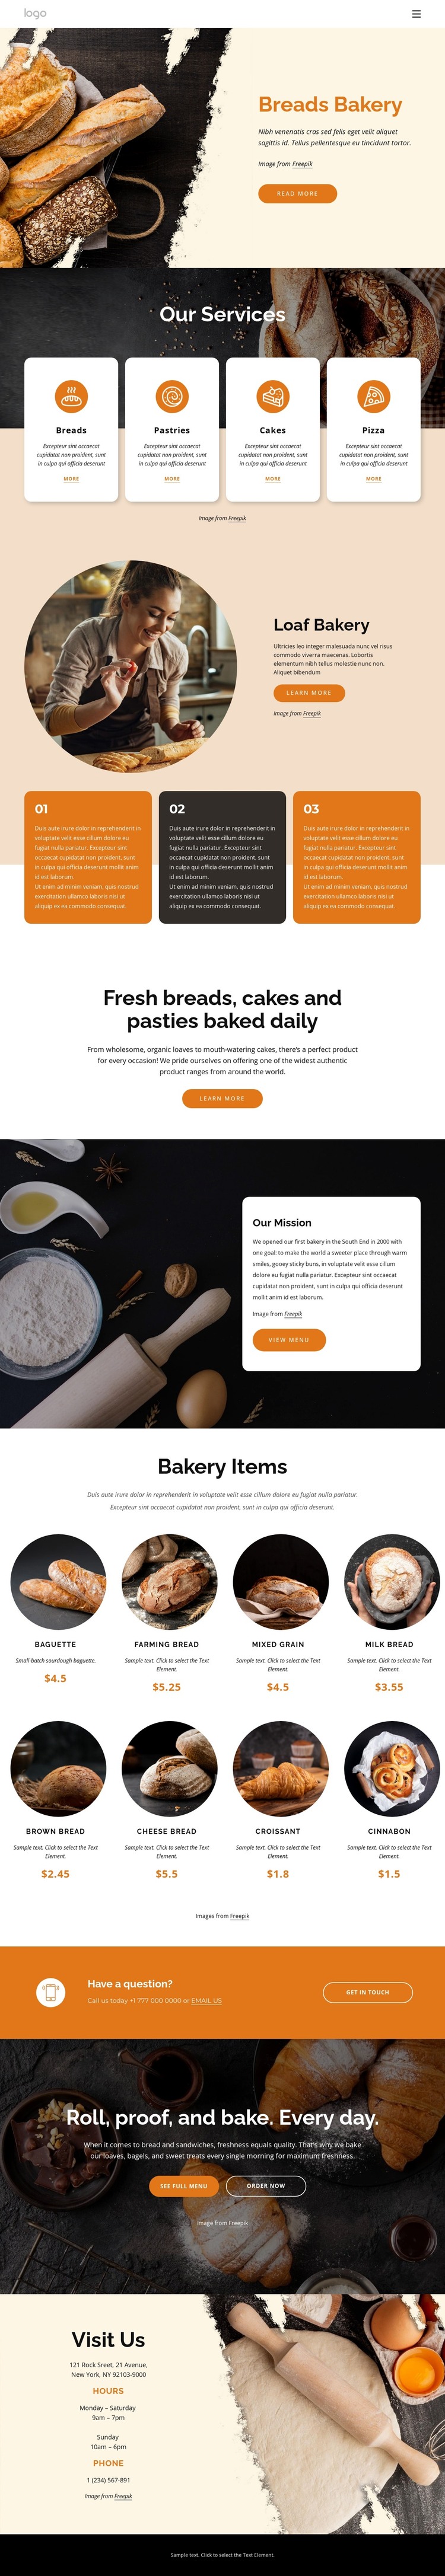 Breads bakery Web Design